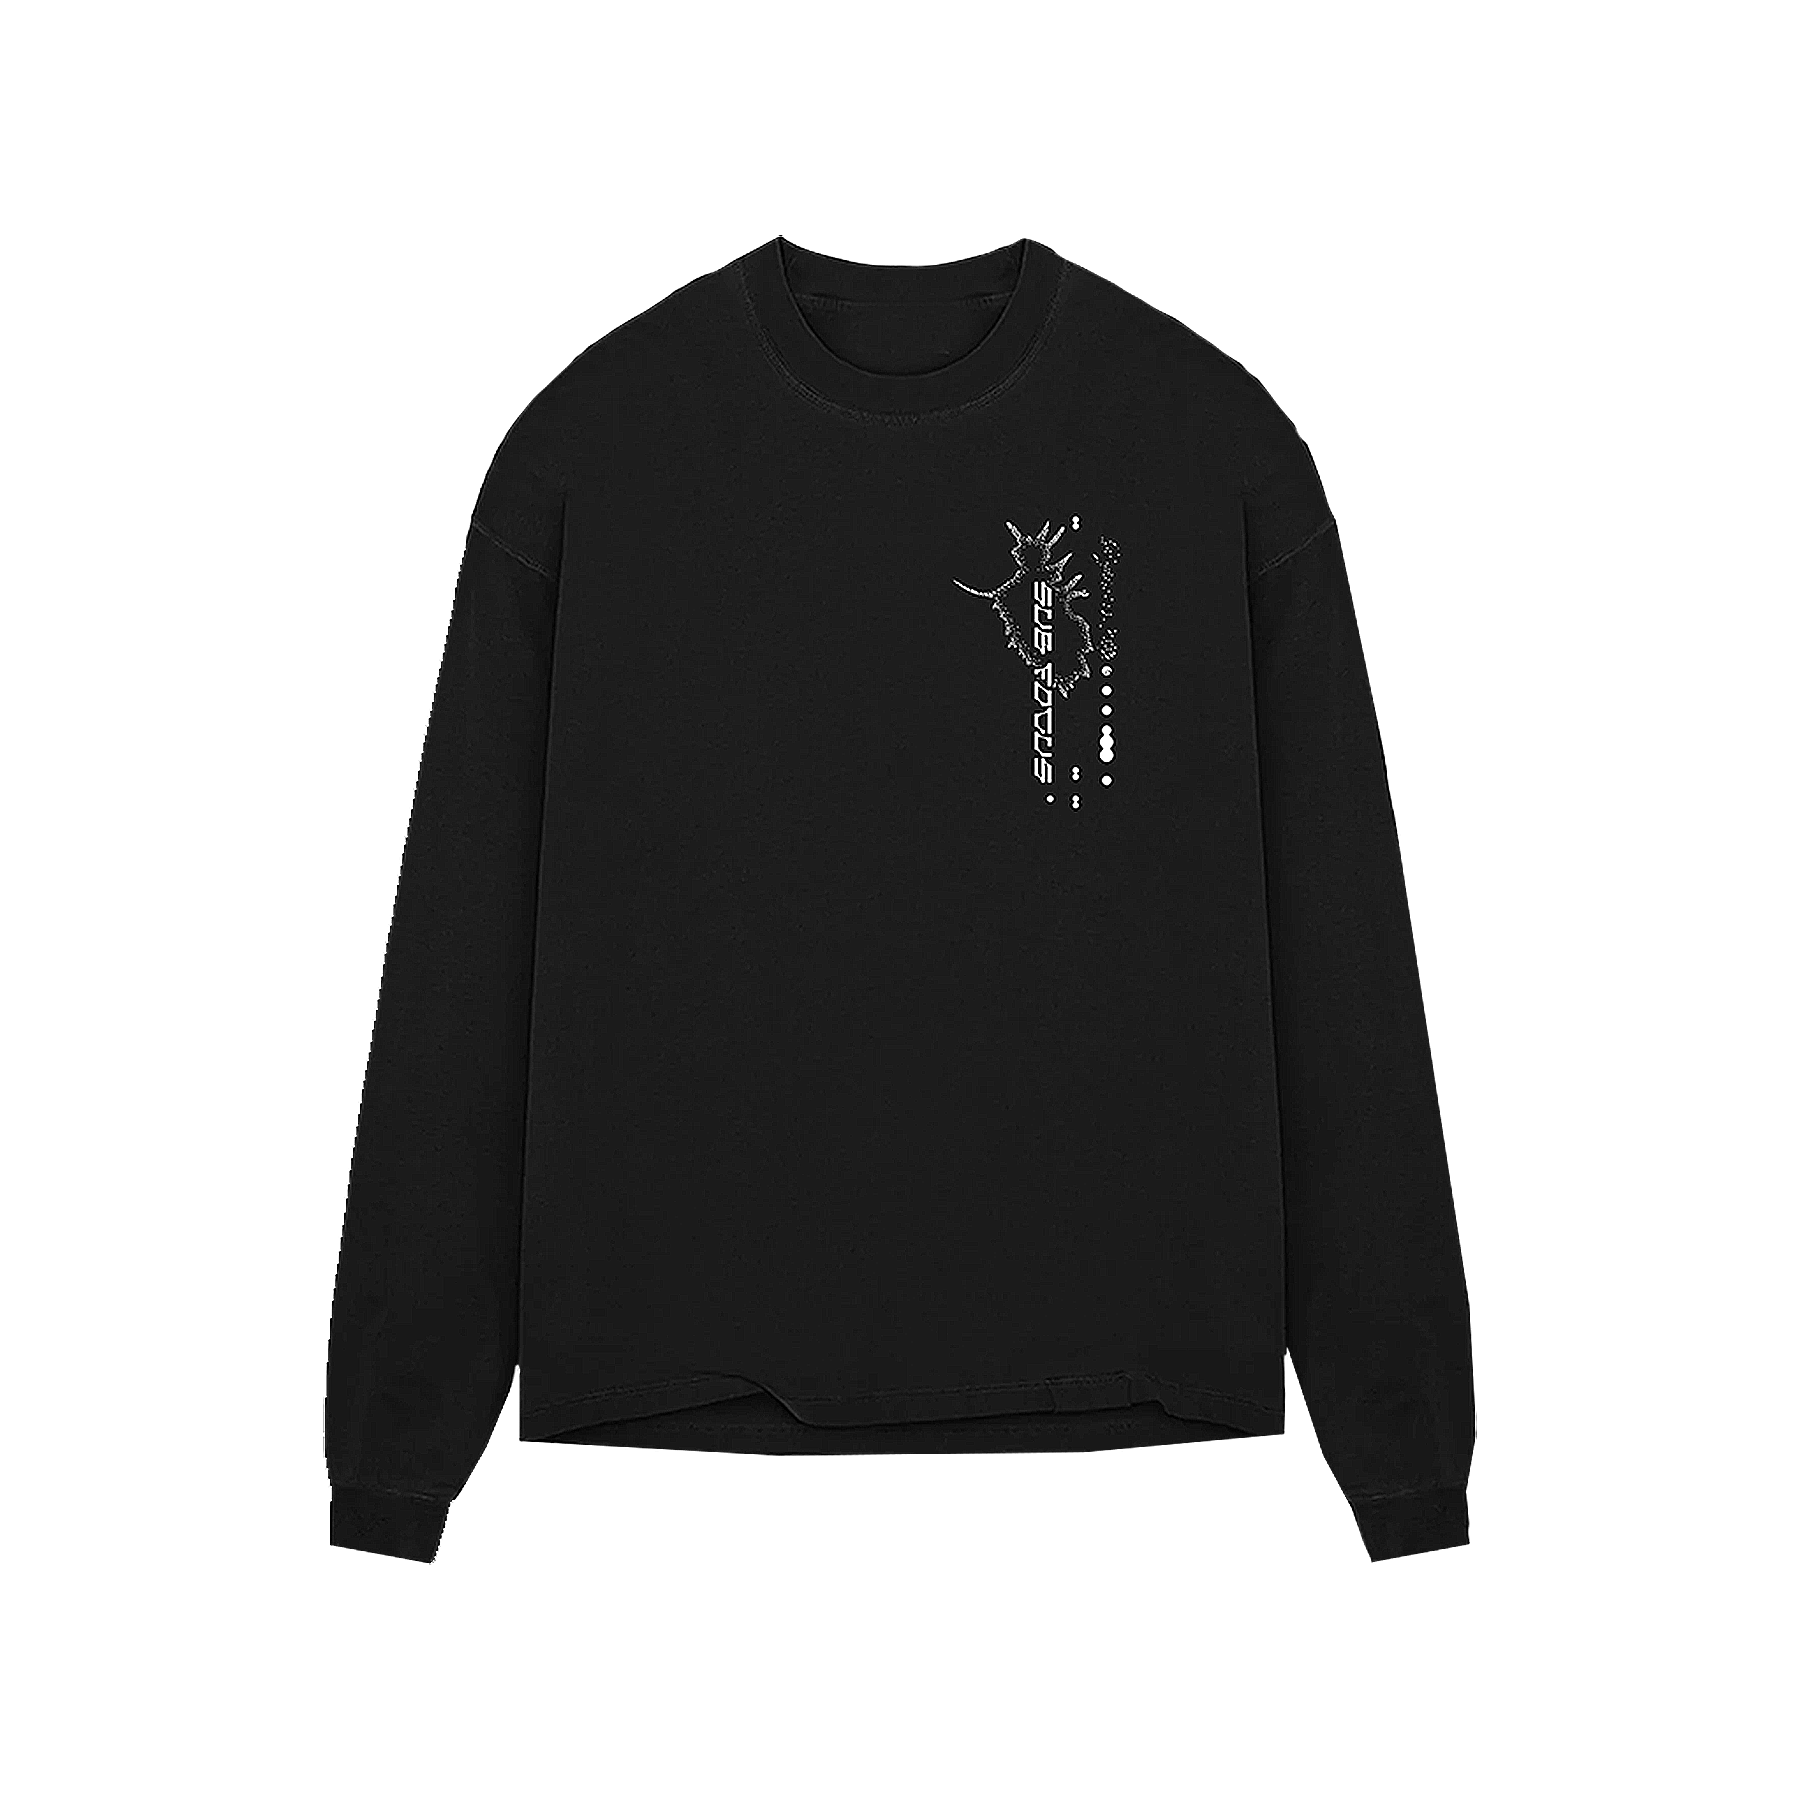 Sub Focus - Limited Edition Evolve Long Sleeve T-Shirt